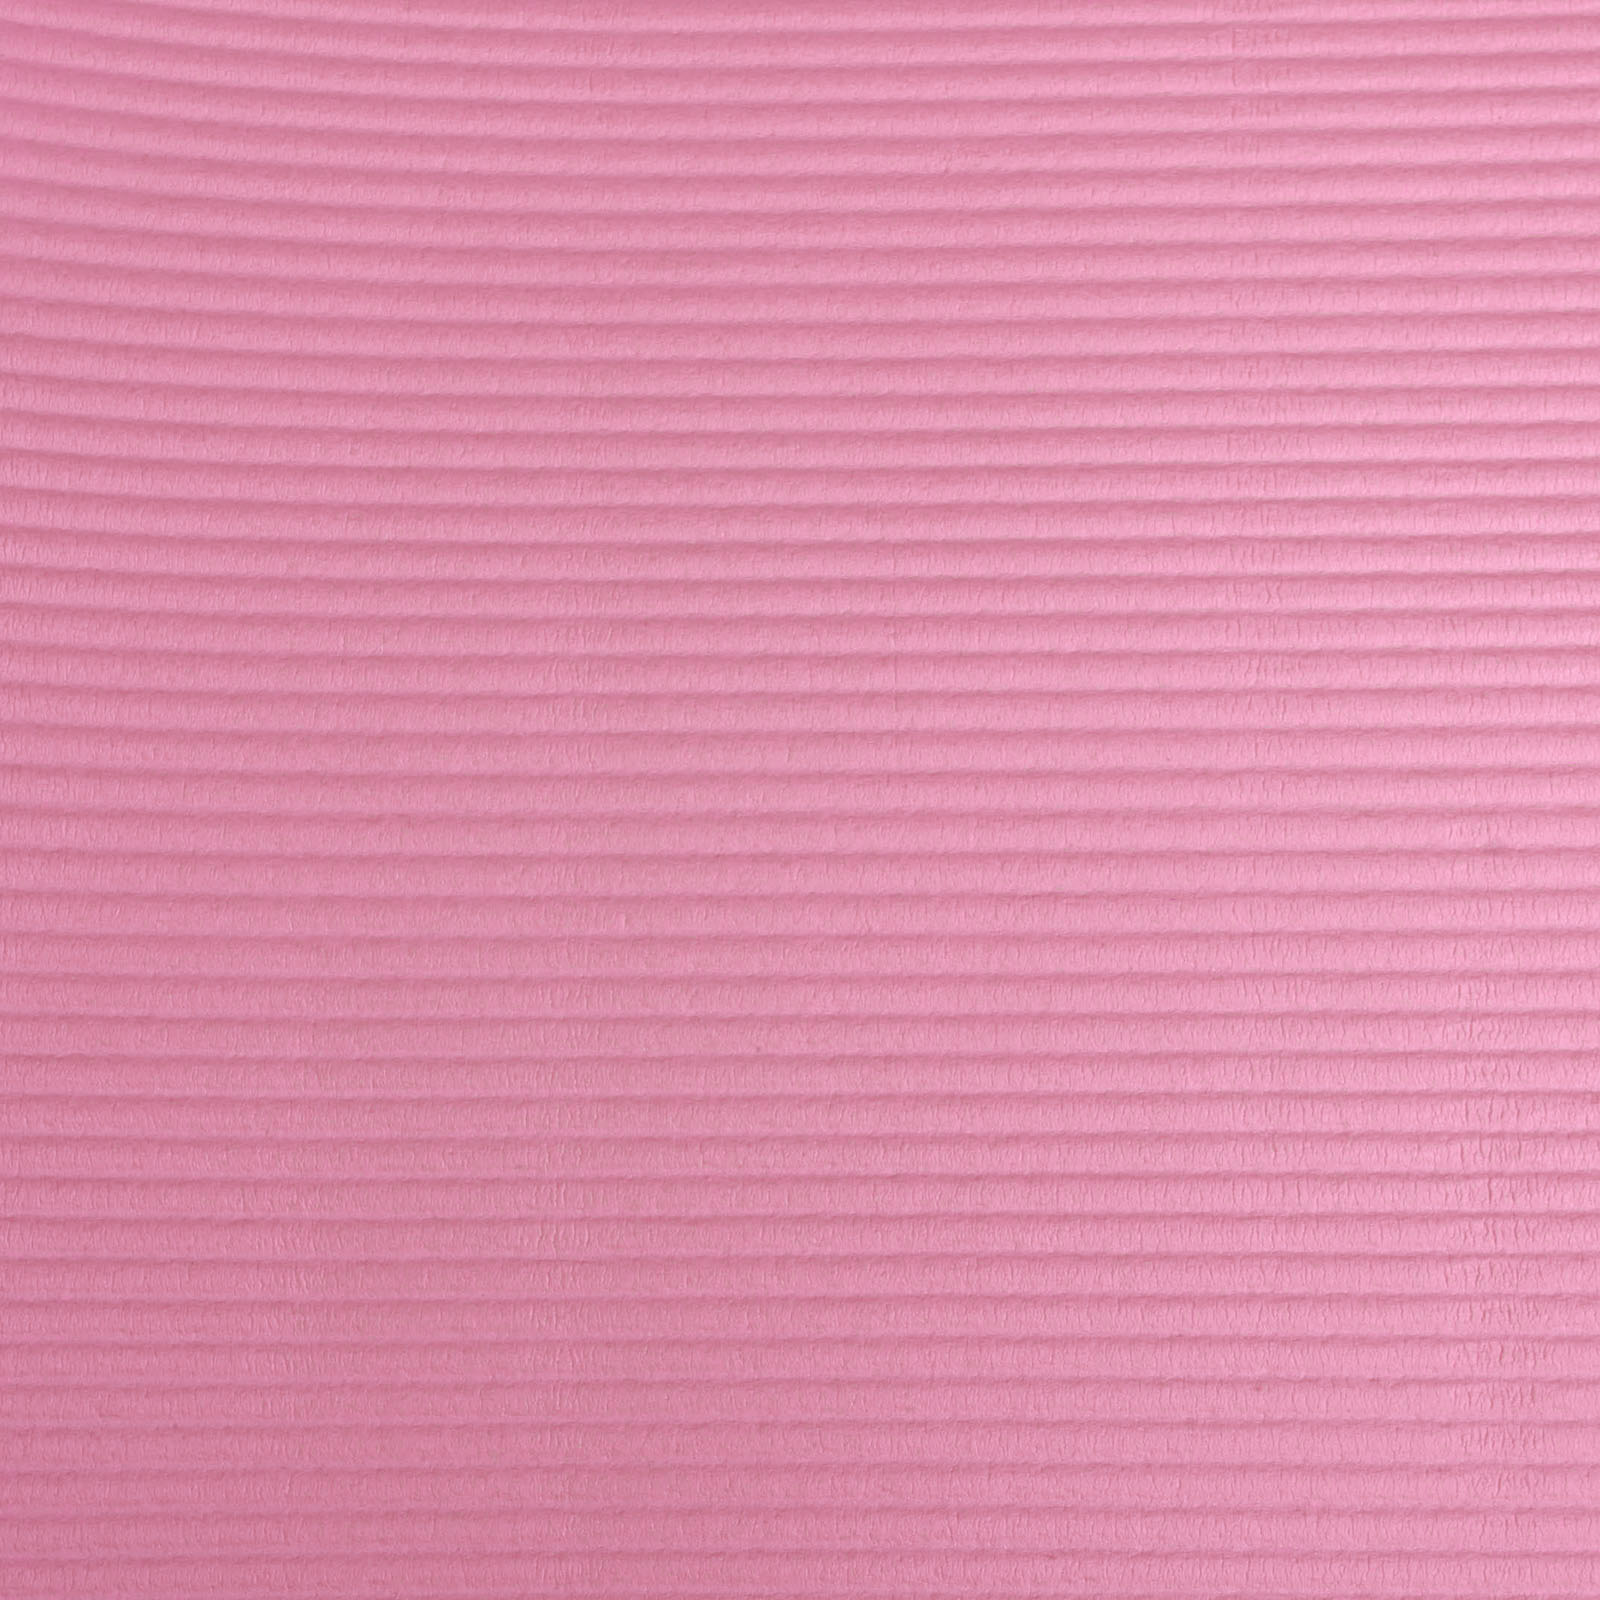 Коврик Sangh Для йоги розовый - фото 4